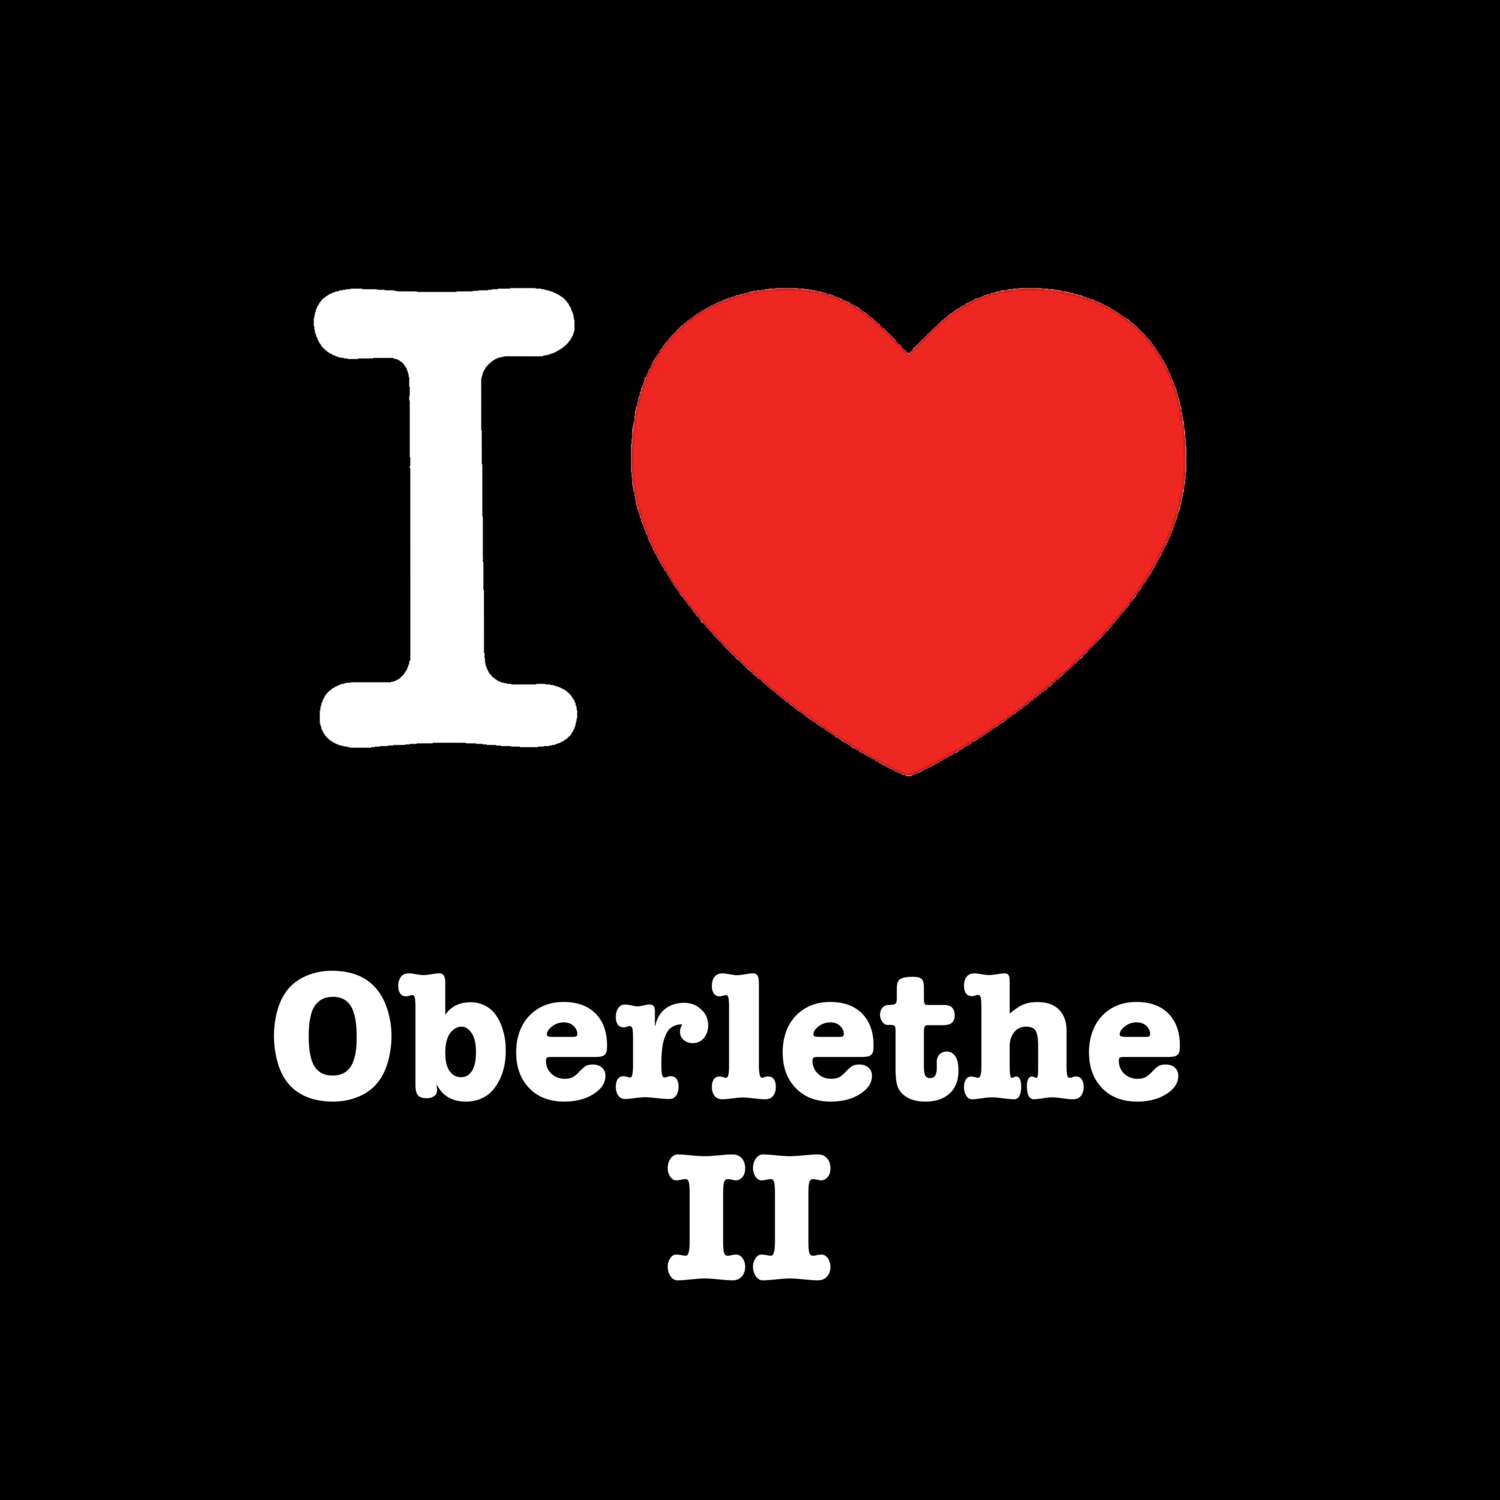 Oberlethe II T-Shirt »I love«